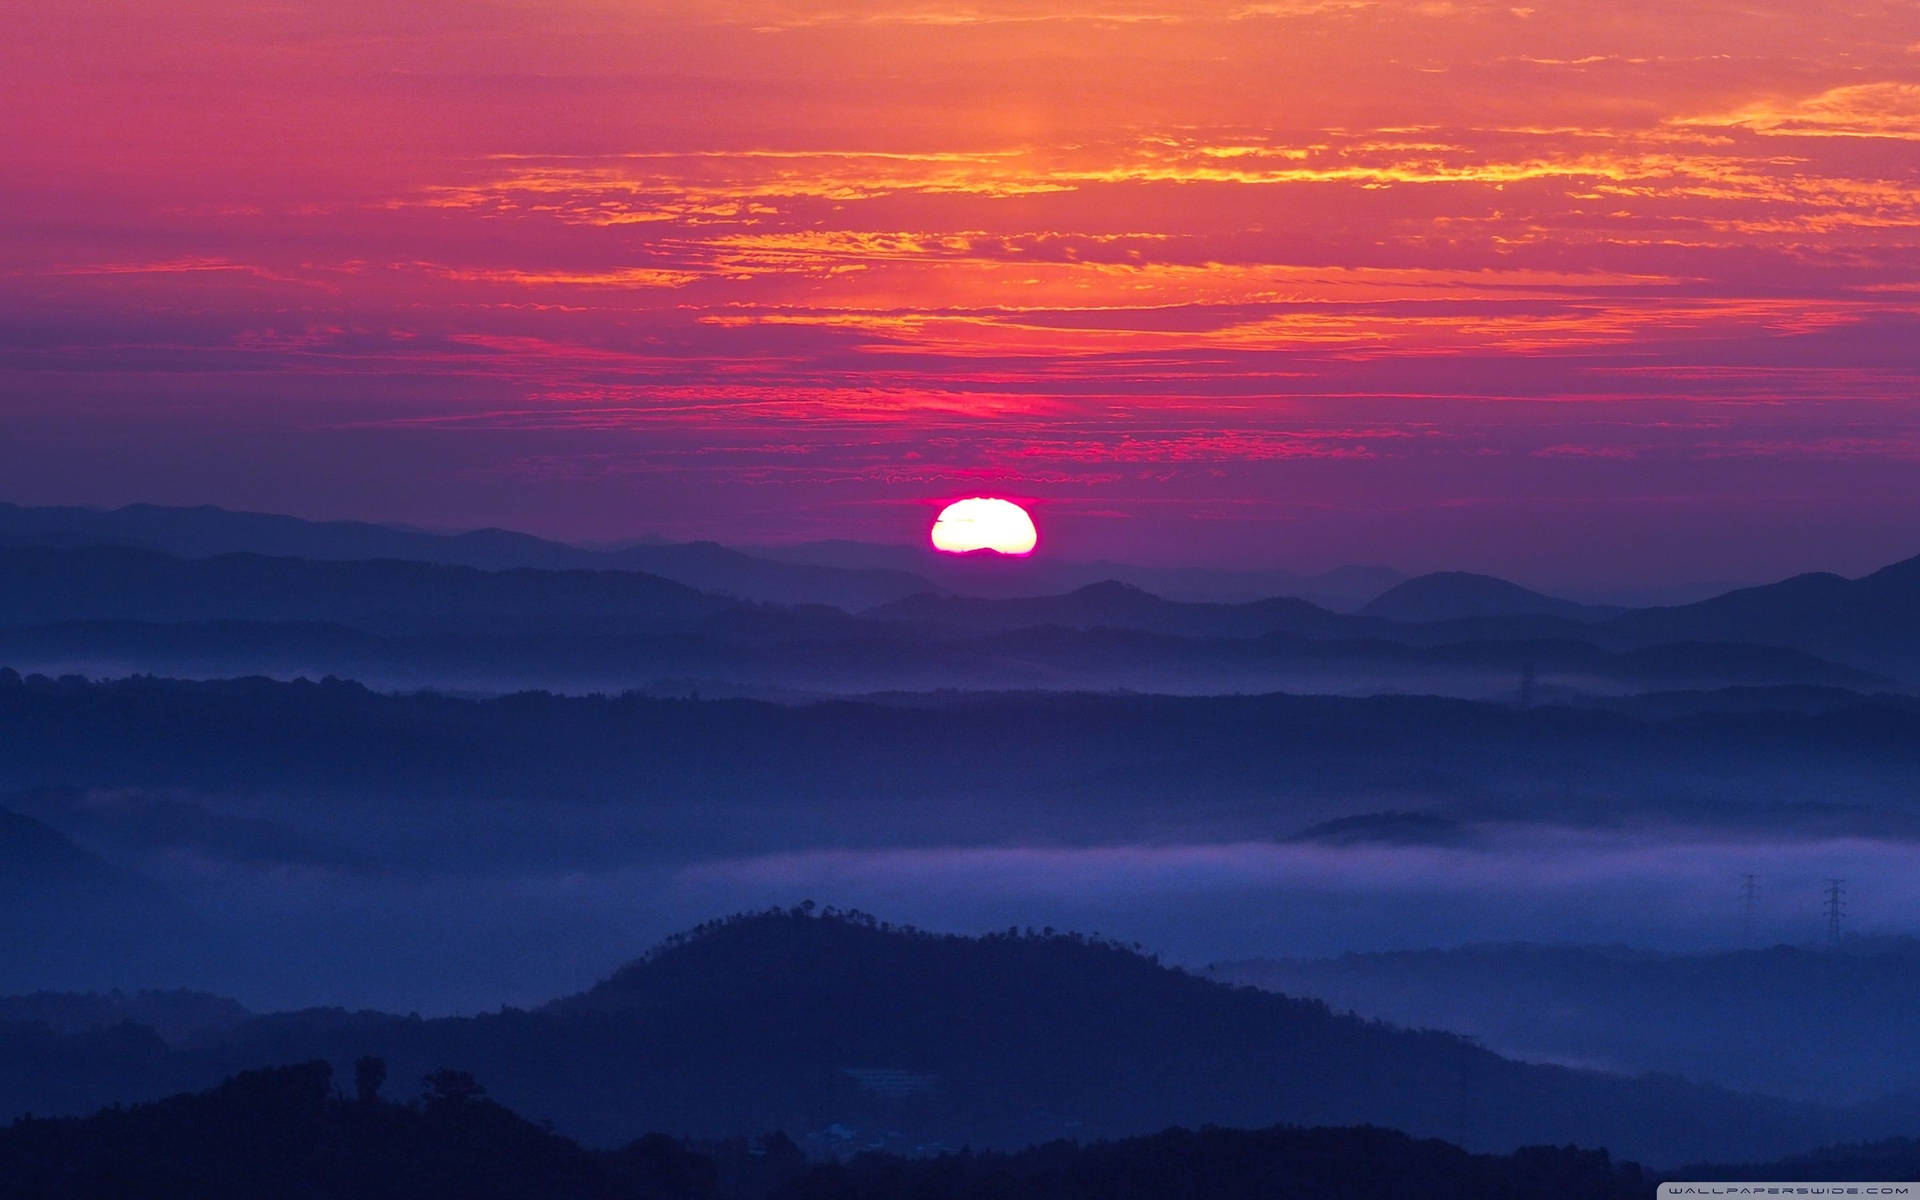 Mountain Sunset Background